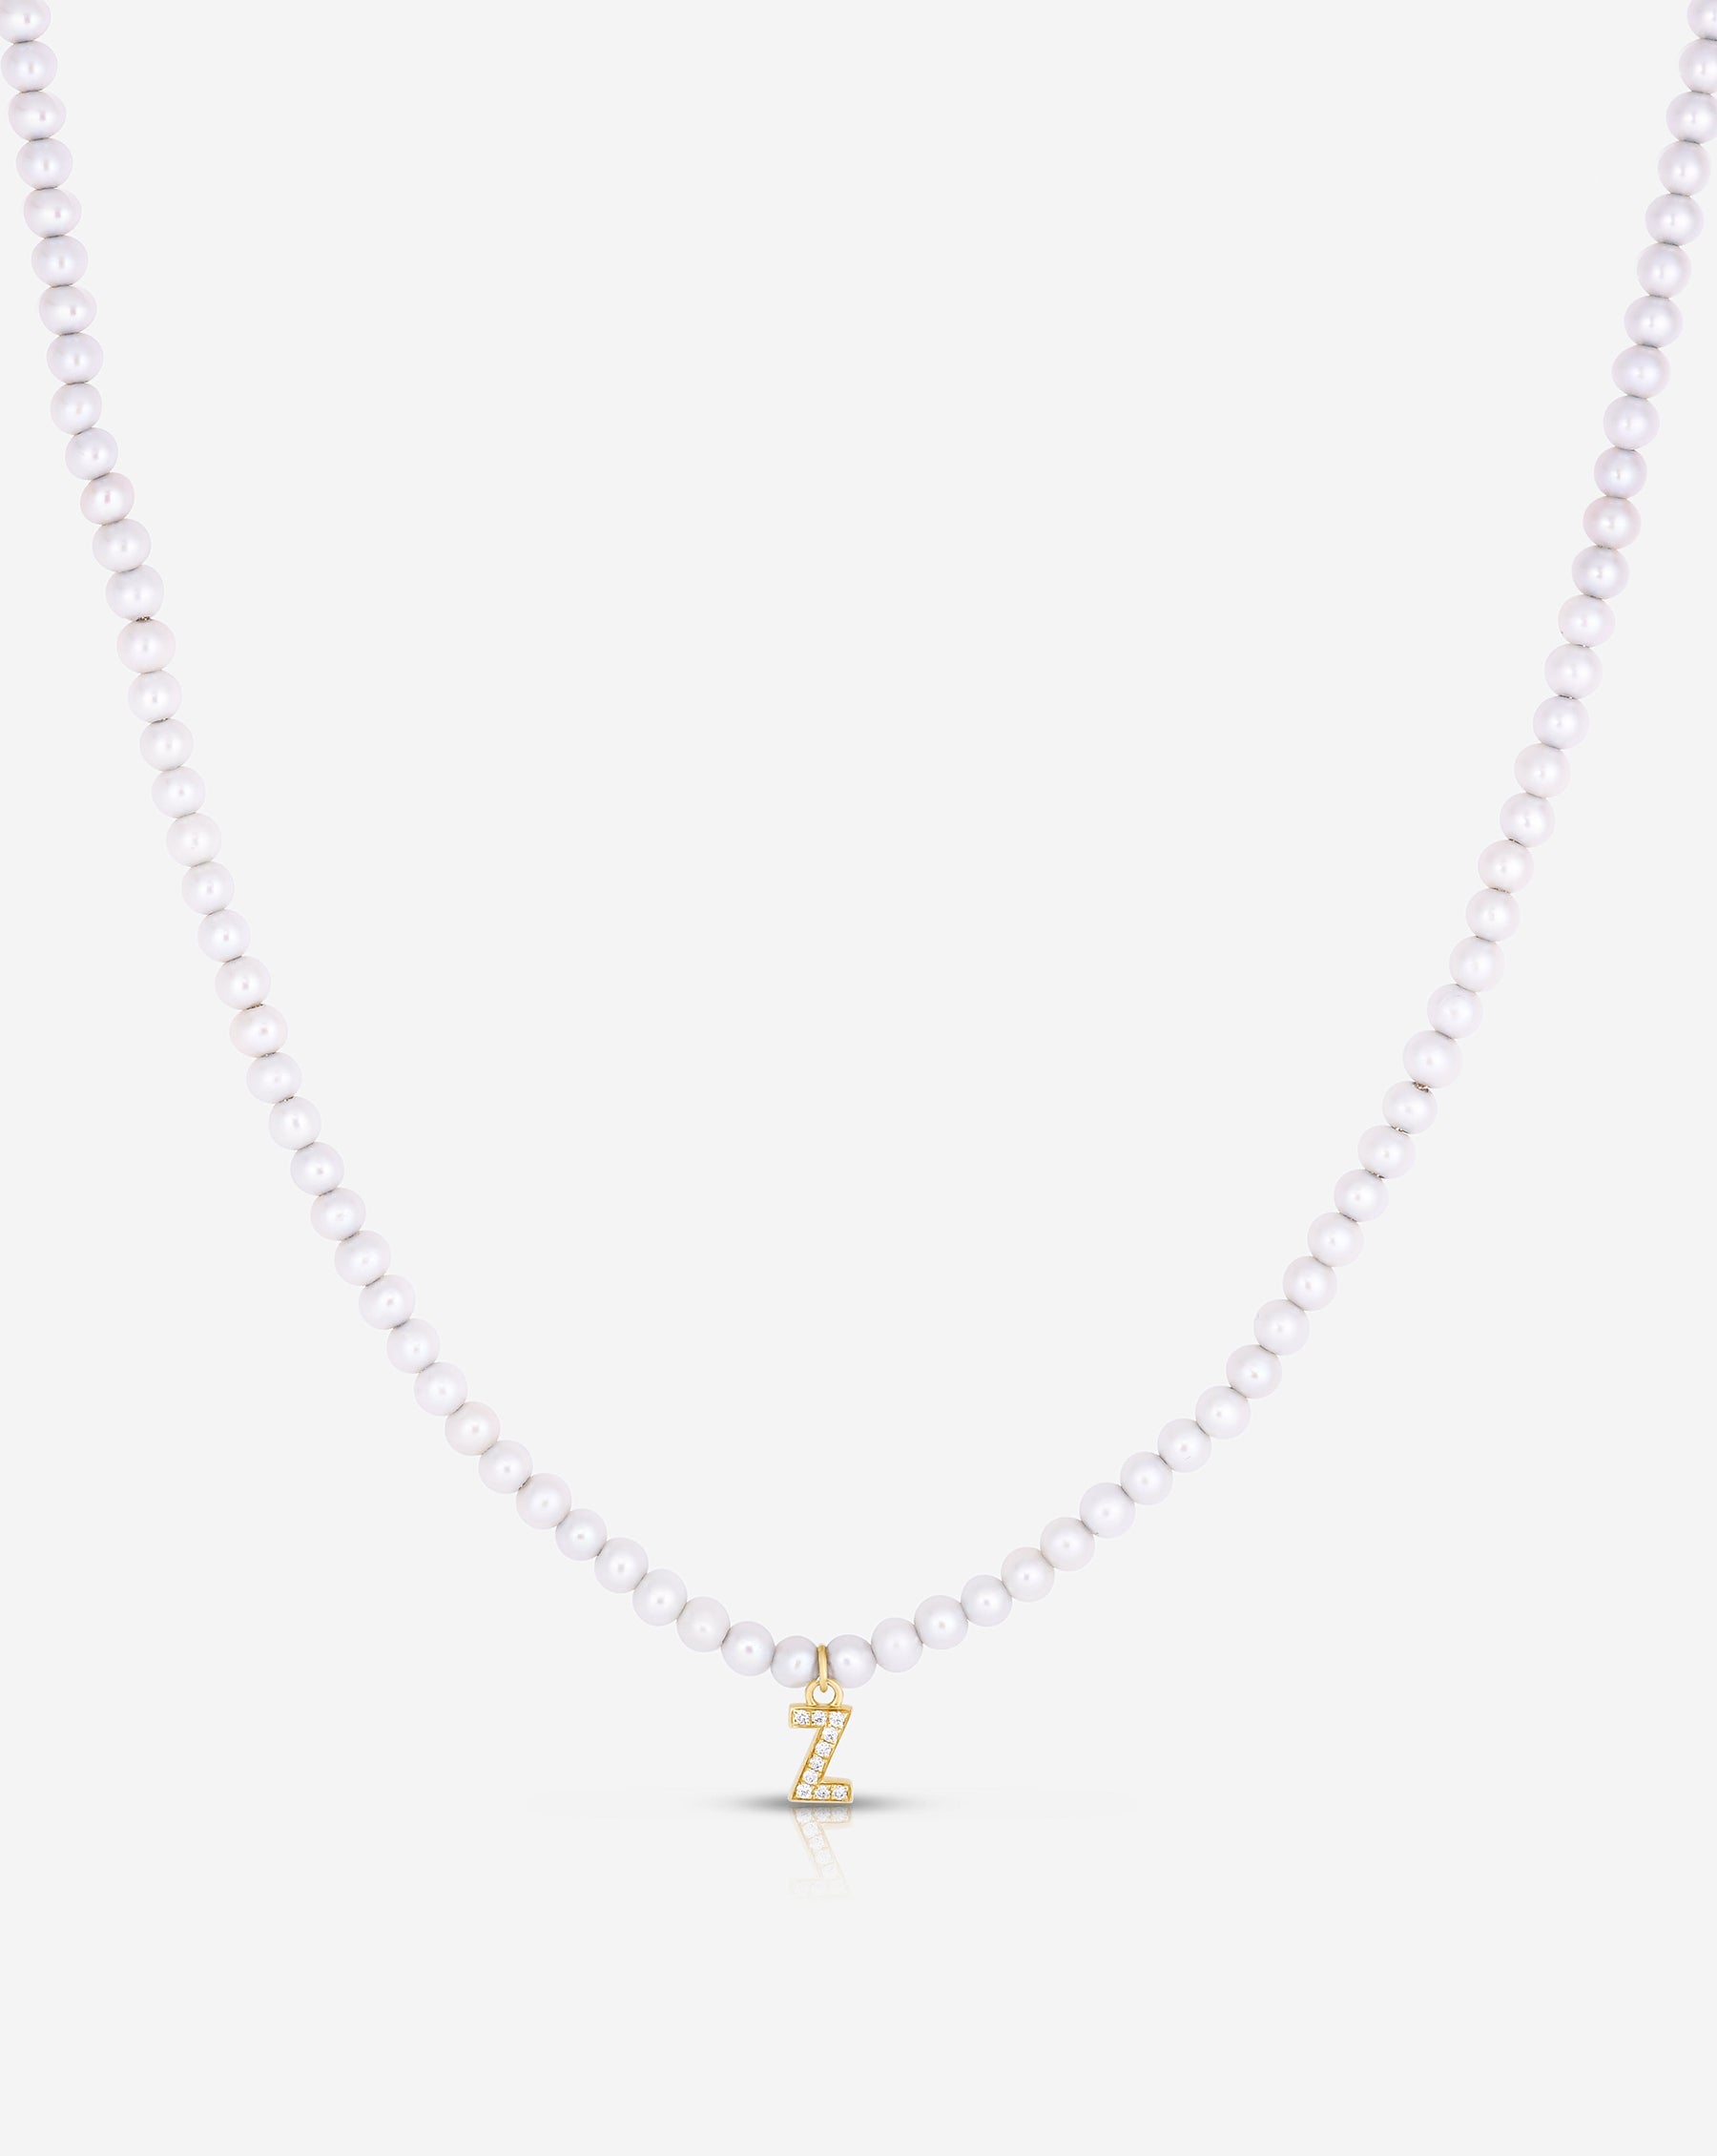 9ct White Gold Diamond Initial J Pendant Necklace - London Road Jewellery